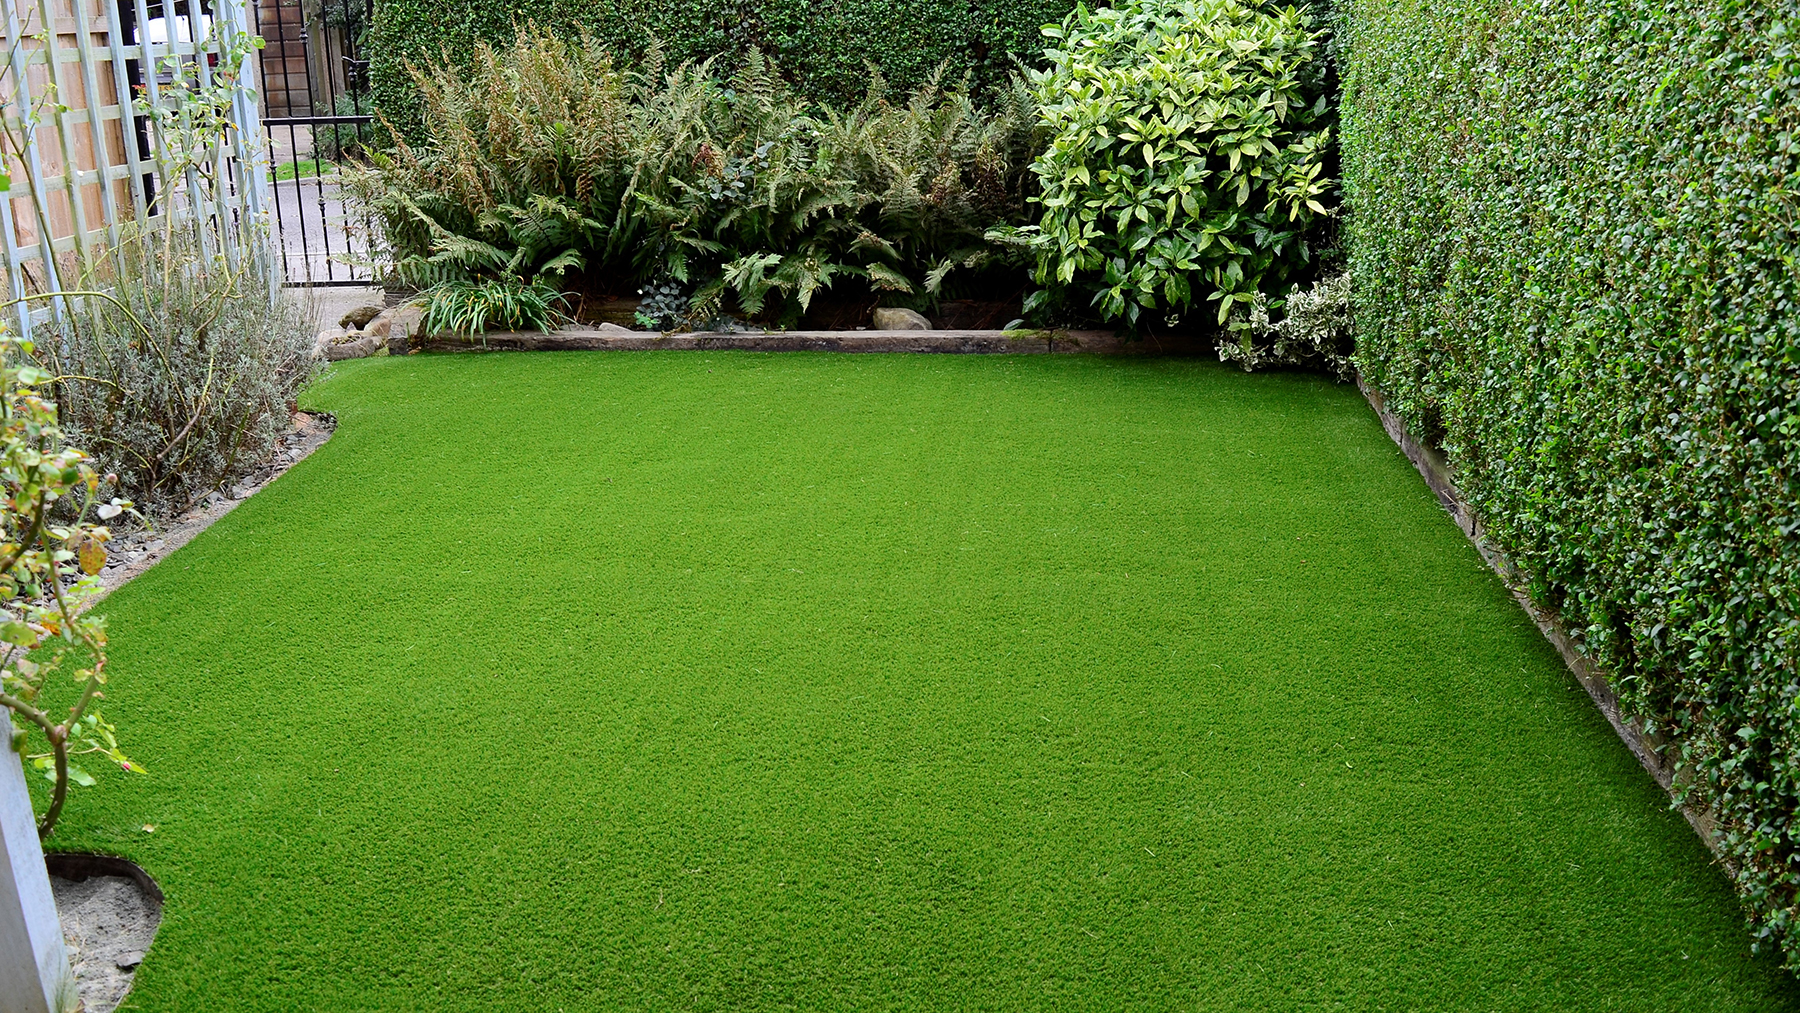 Neat garden with an artificial lawn